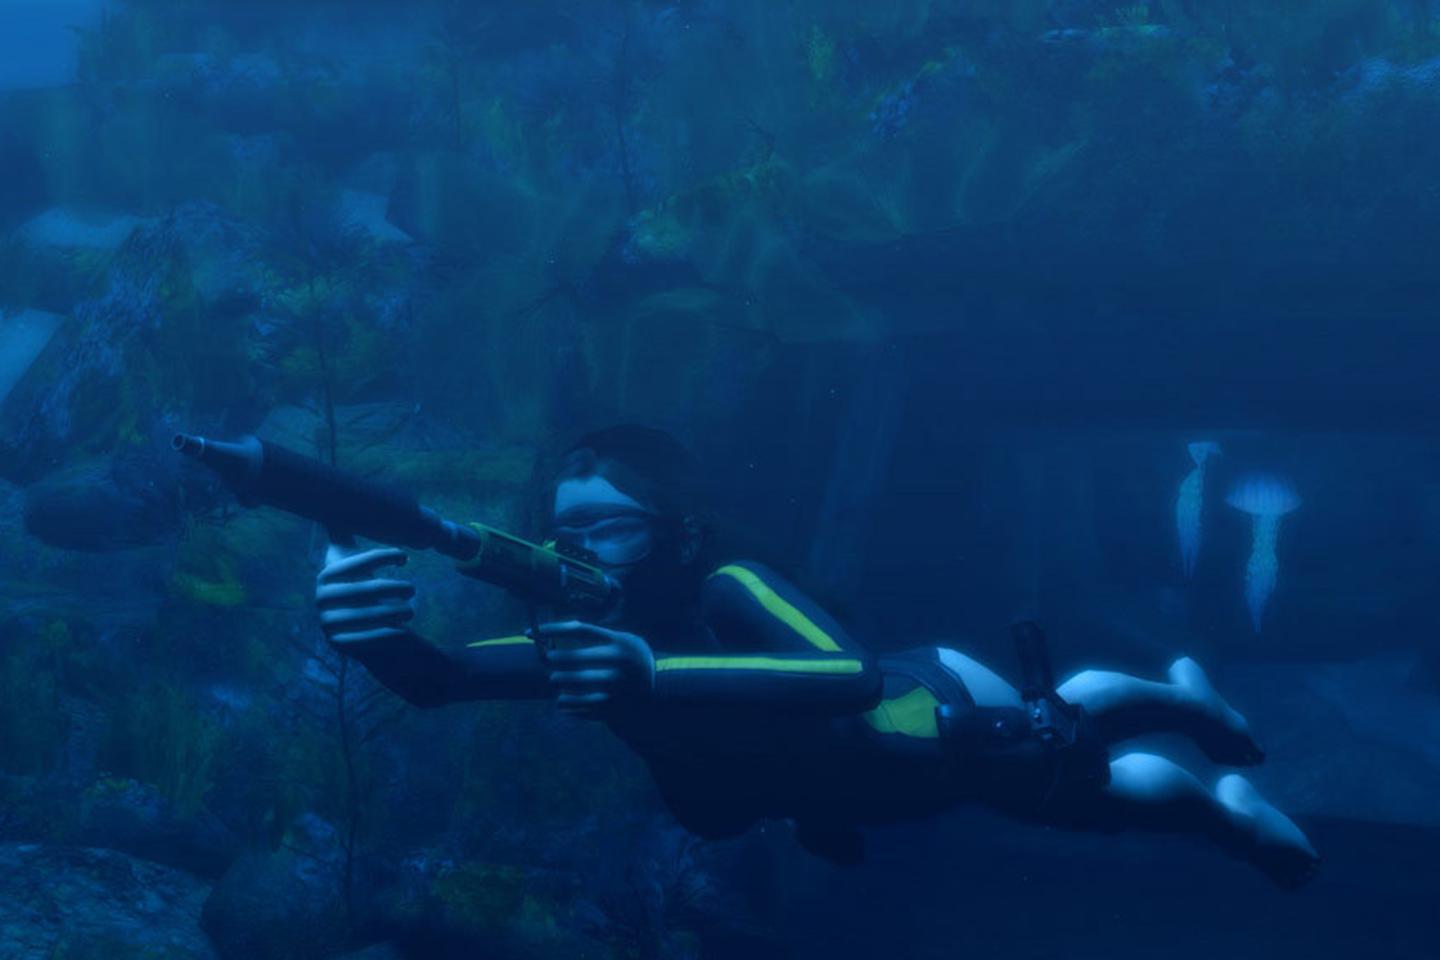 Lara wearing scuba gear underwater pointing gun.